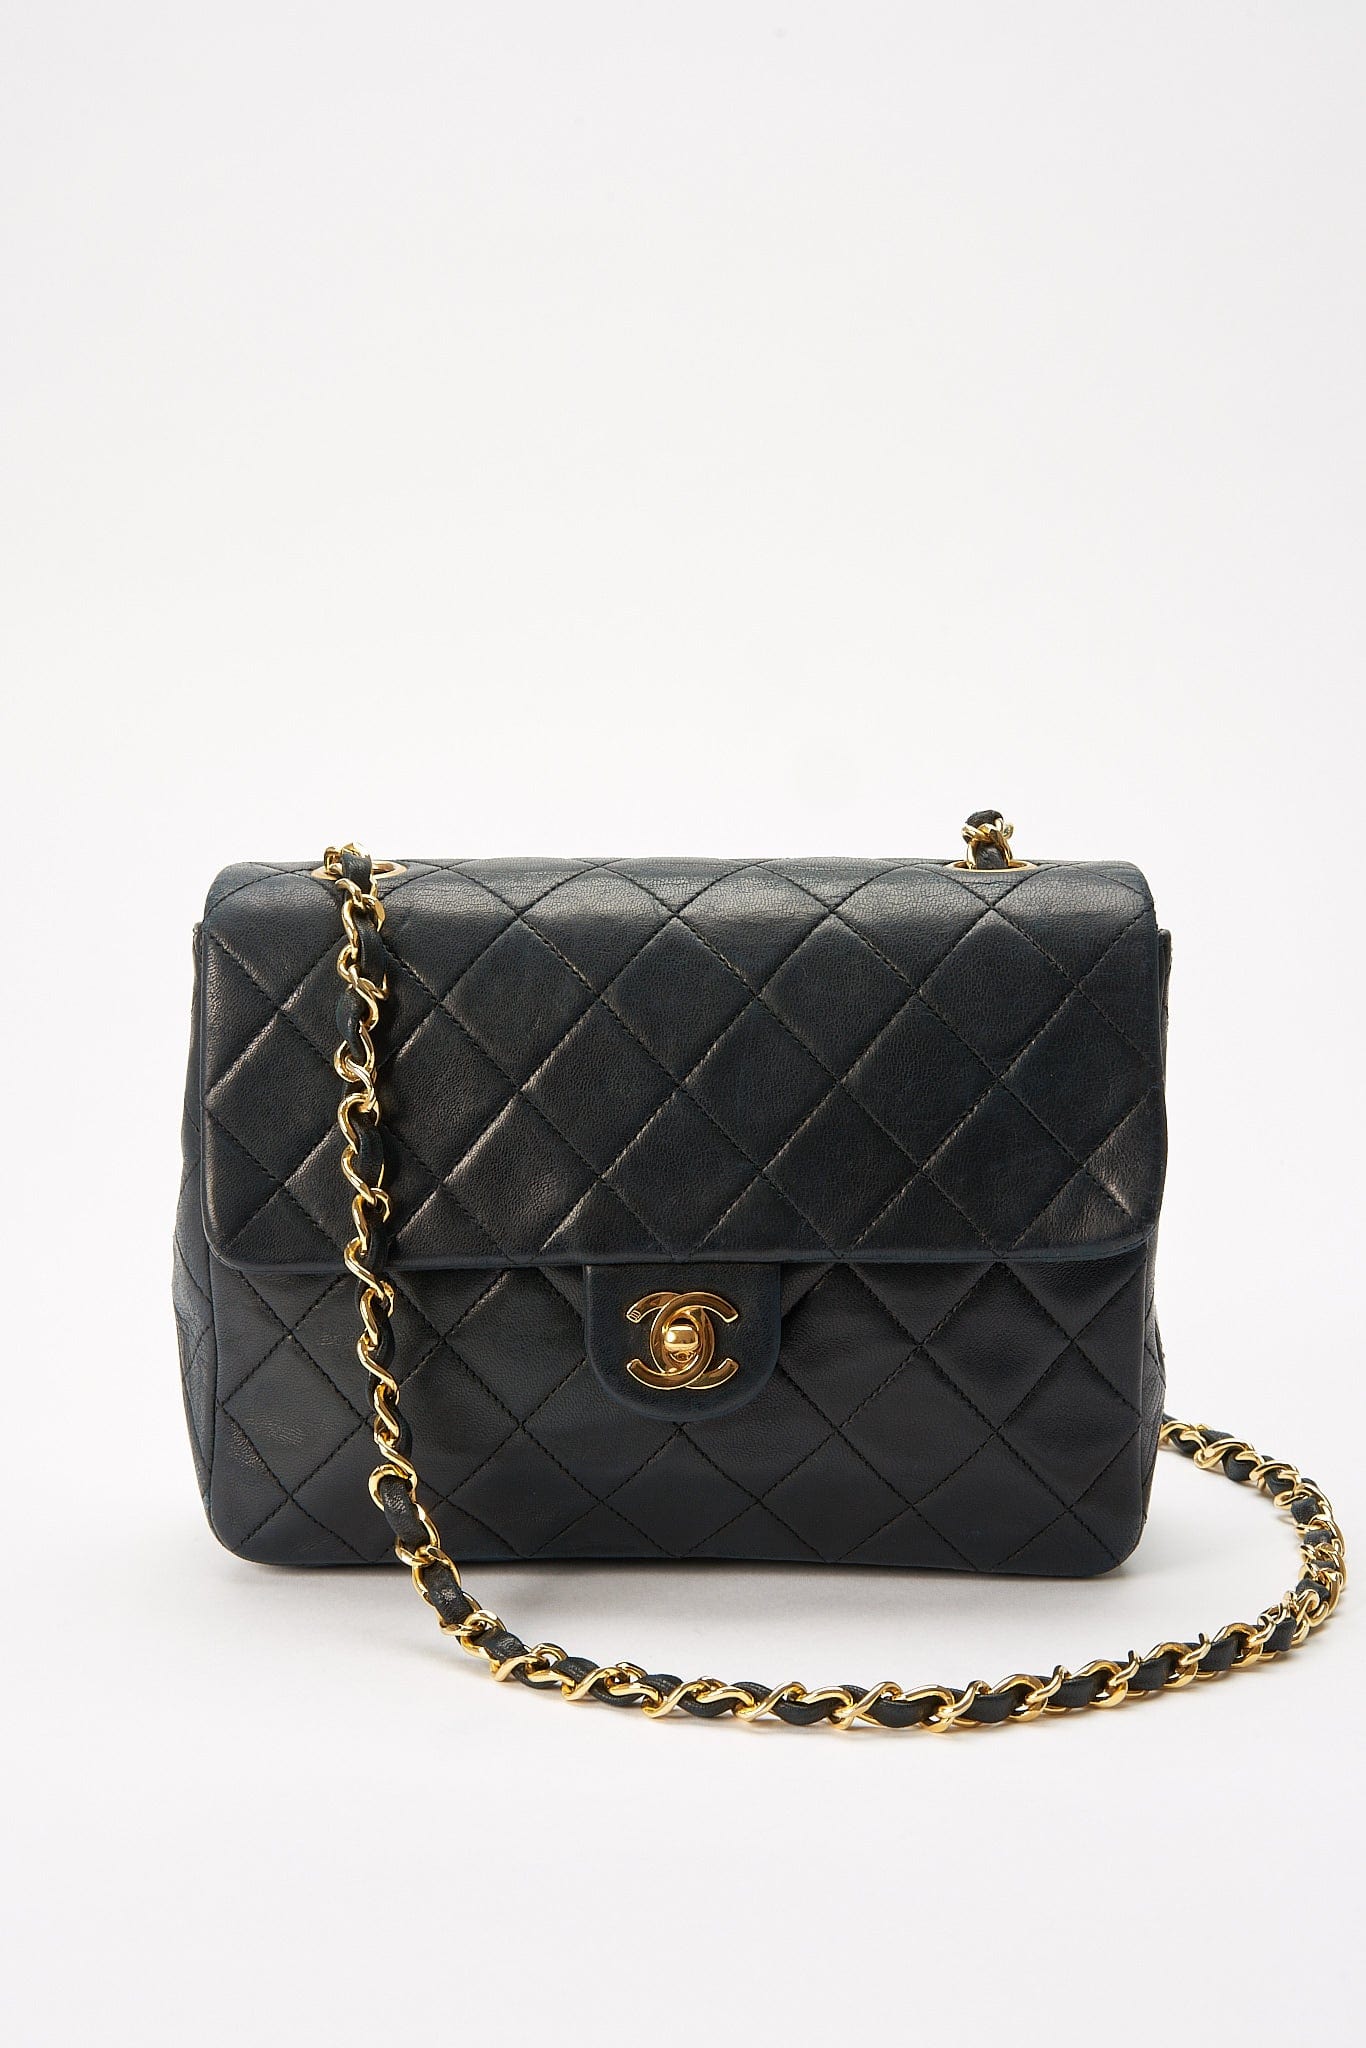 Chanel Lambskin Classic - Small in Black Handbag - Authentic Pre-Owned Designer Handbags